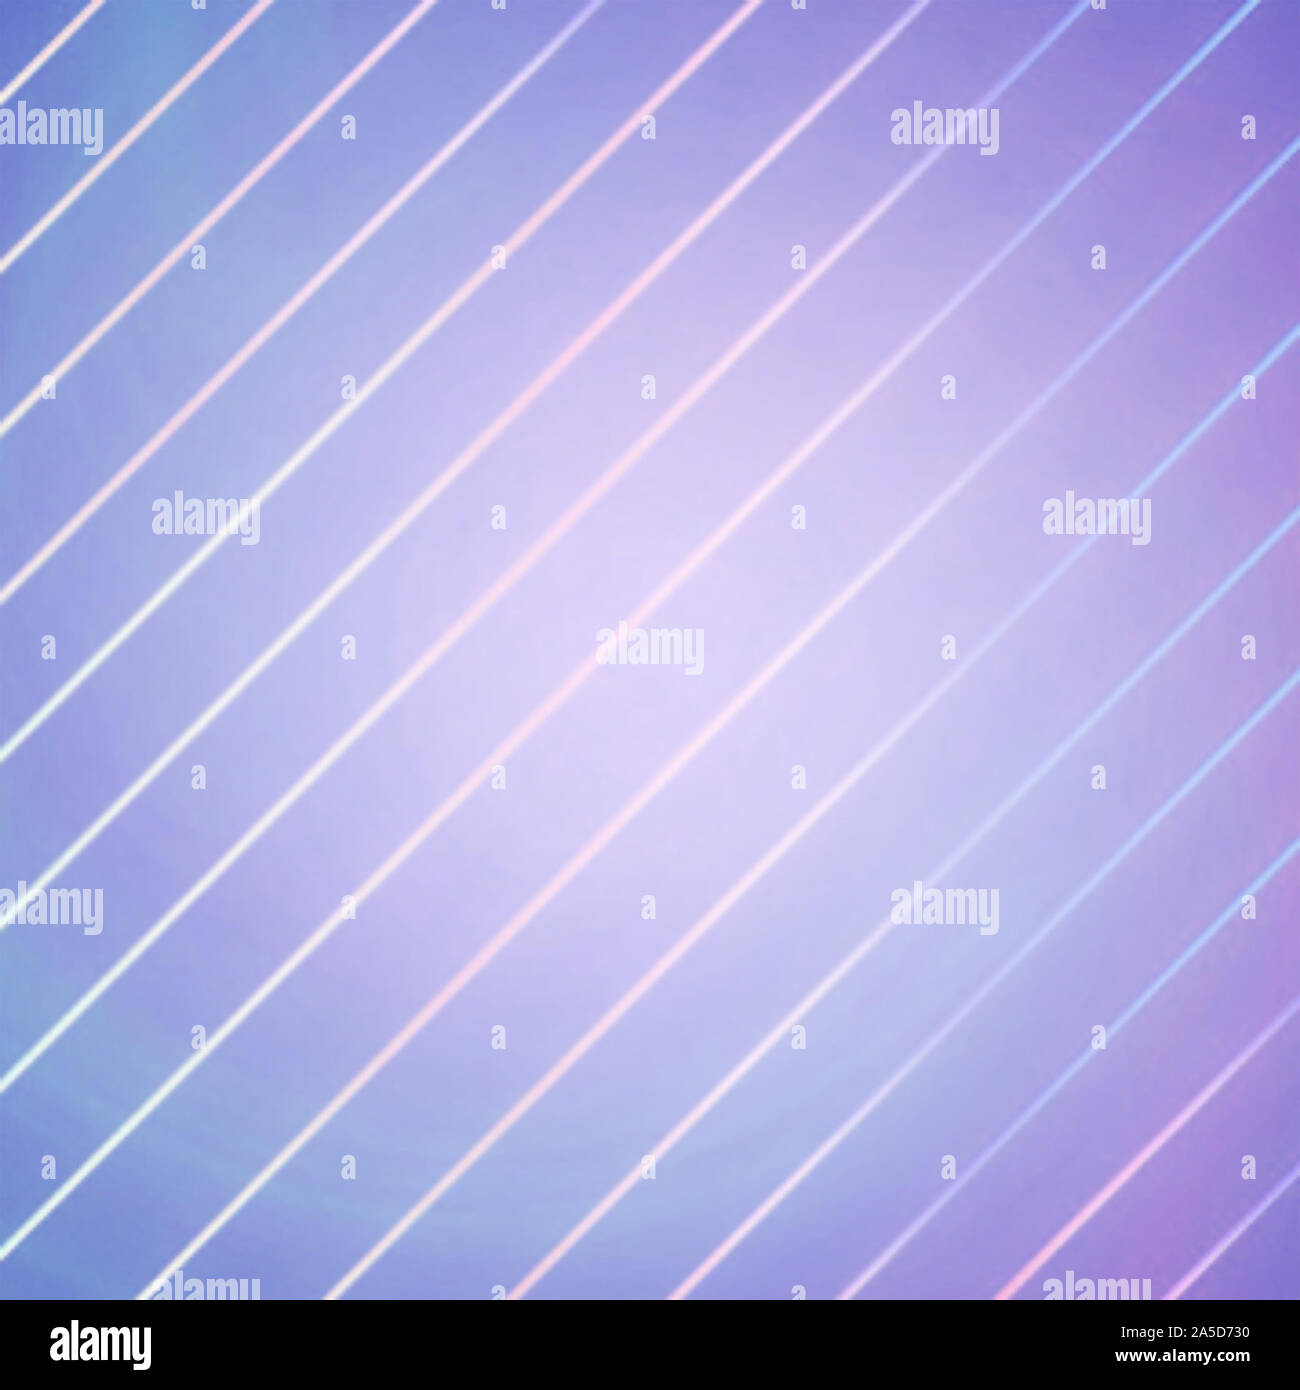 Creative geometric line art on blue gradient background, Blurry illustration Stock Photo